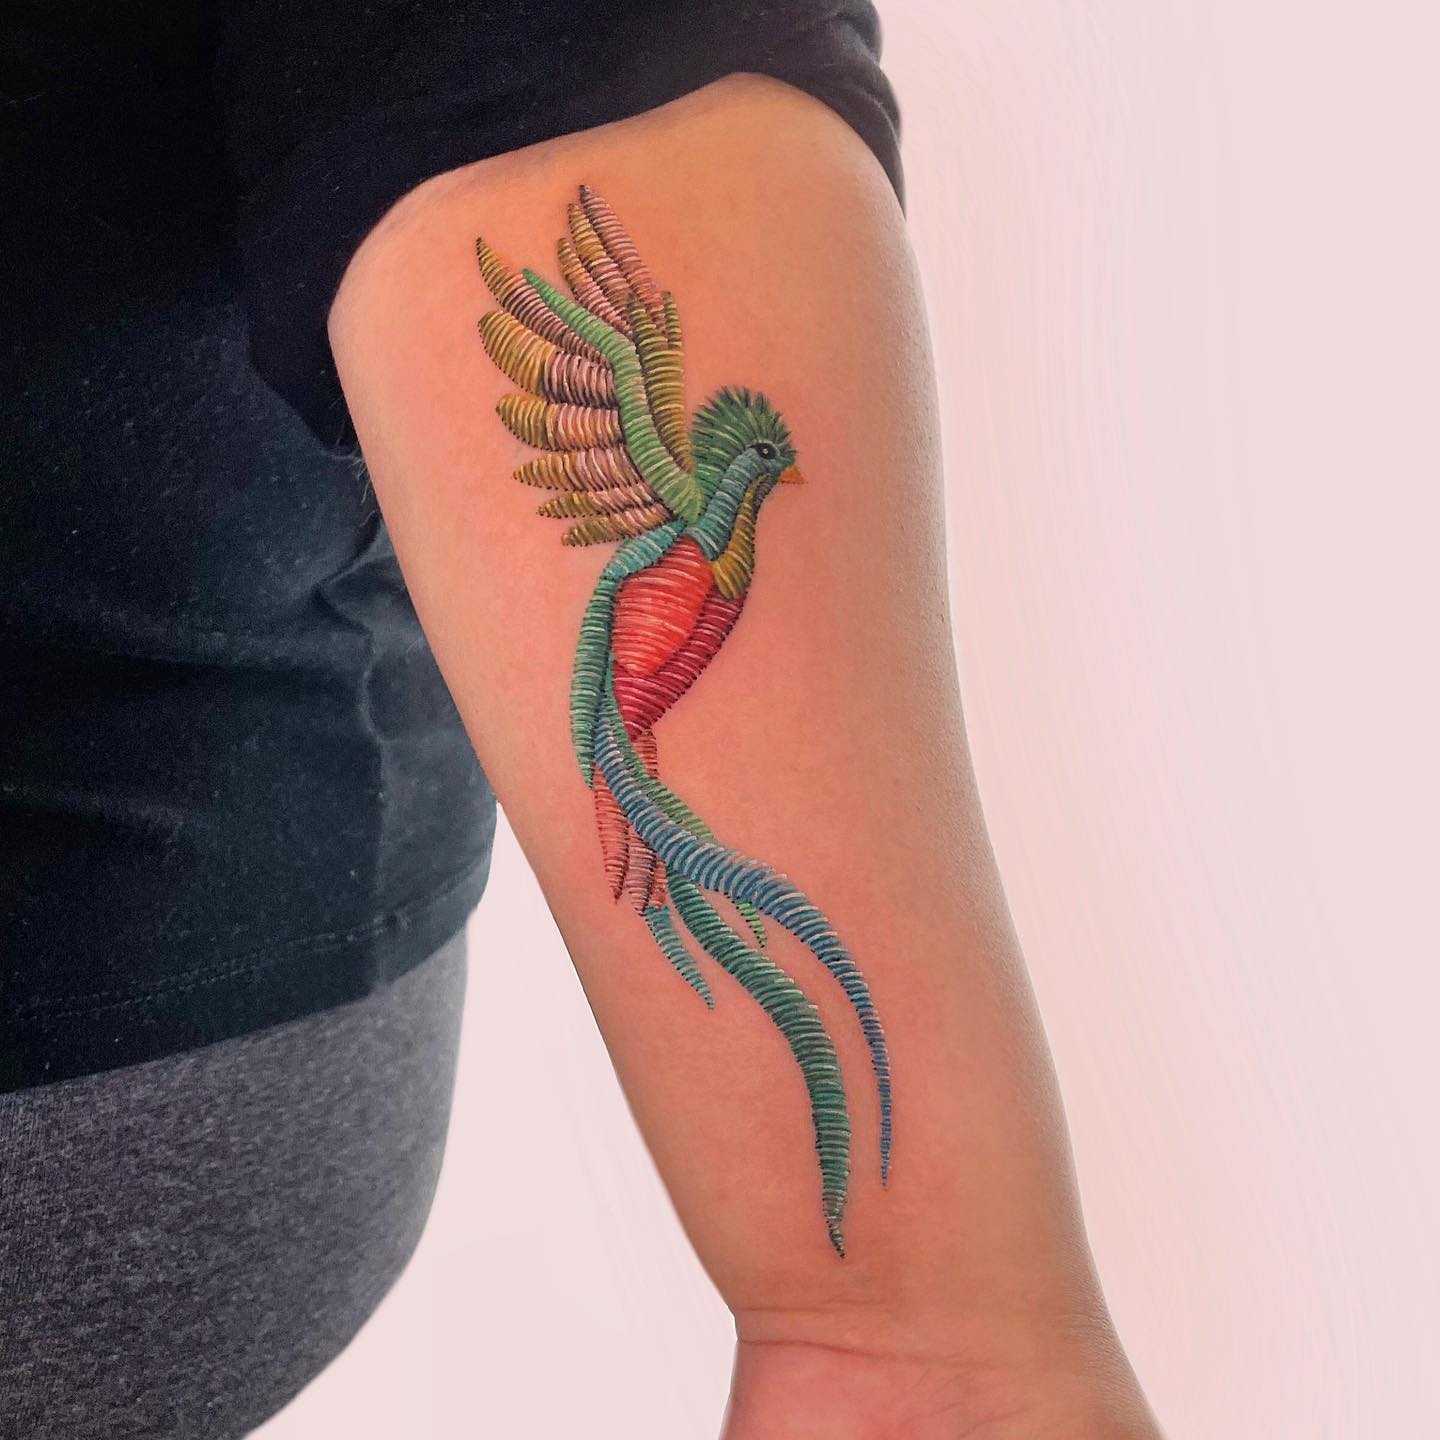 Multicolored phoenix embroidery tattoo on arm